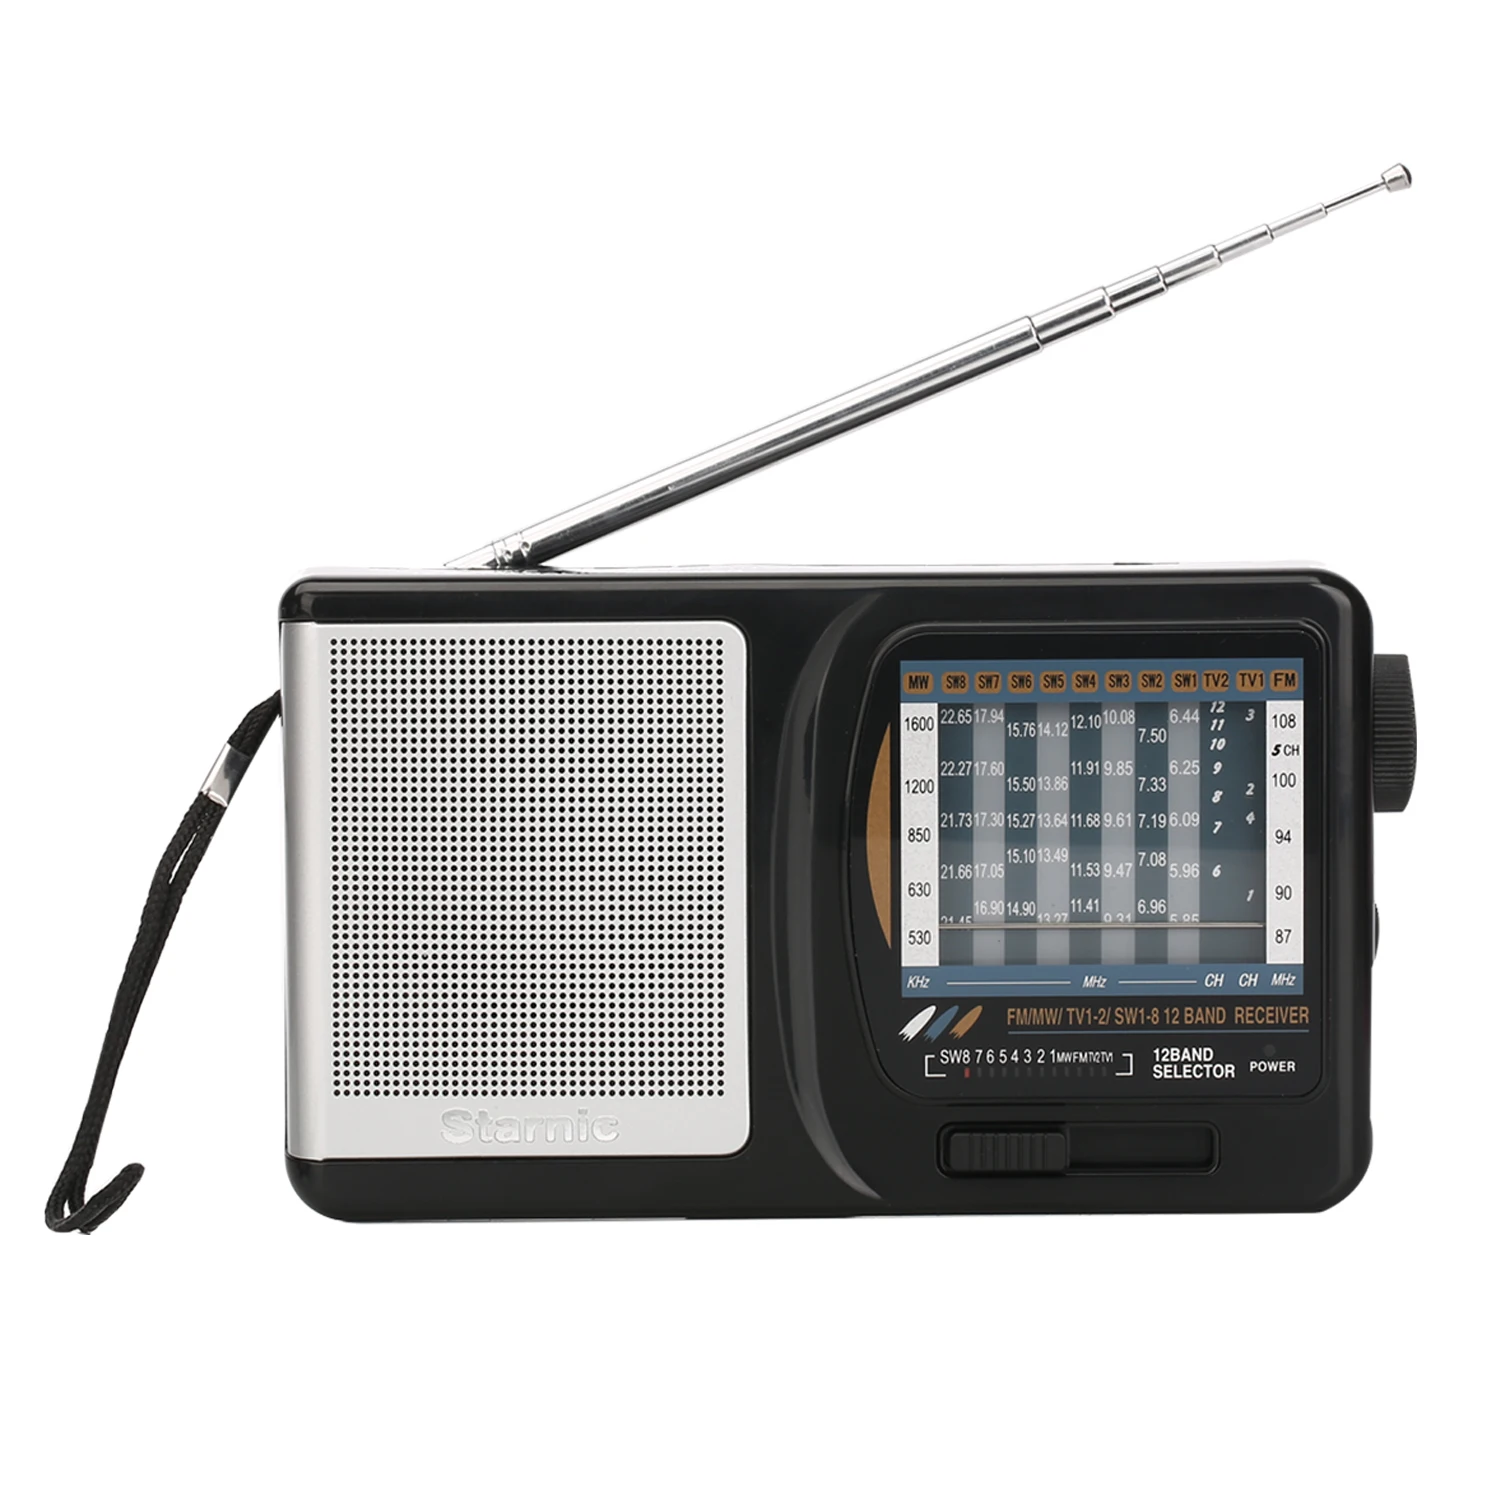 Cheap Portable Am Fm Sw Tv 12 Band Radio With Telescopic Metal Antenna -  Buy Portable Tv Radio,Tv Band Radio,Fm Mw Sw Band Radio Product on  